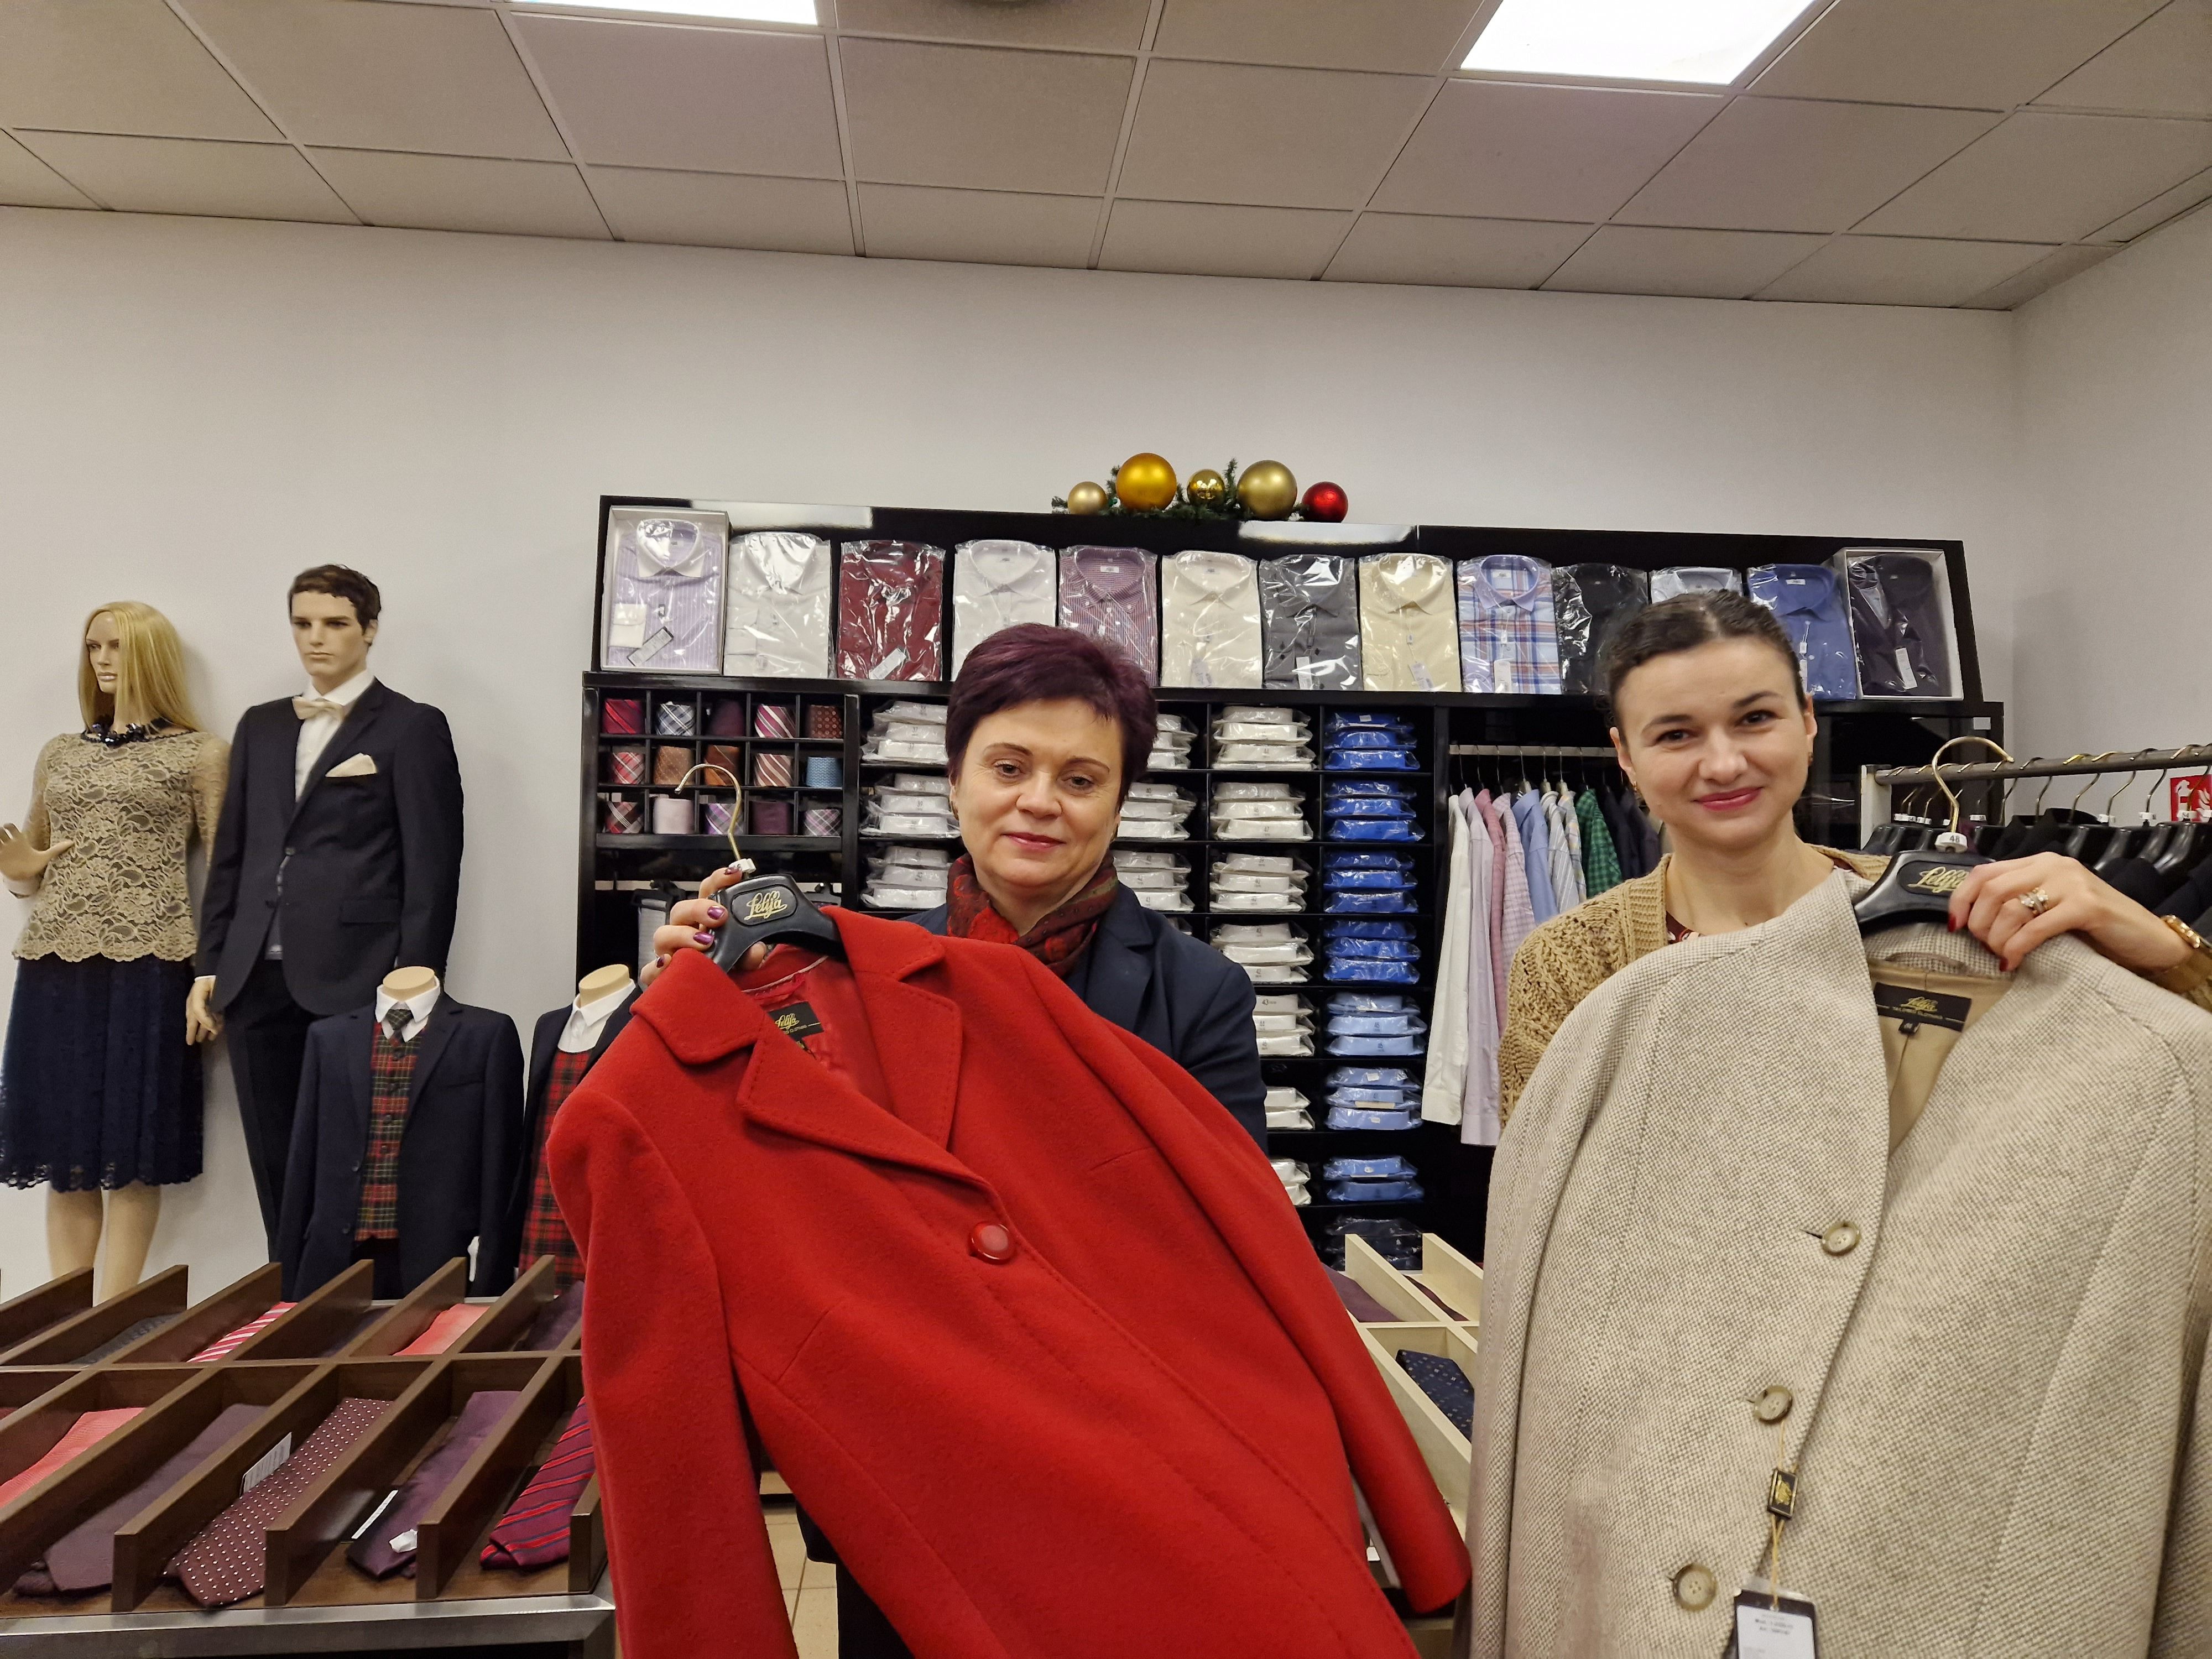 Продавщицы фрменного магазина фабрики Lelija в вильнюсском центральном универмаге Эльвира Мейштене (слева) и Риманте Анкуда представляют новинки сезона